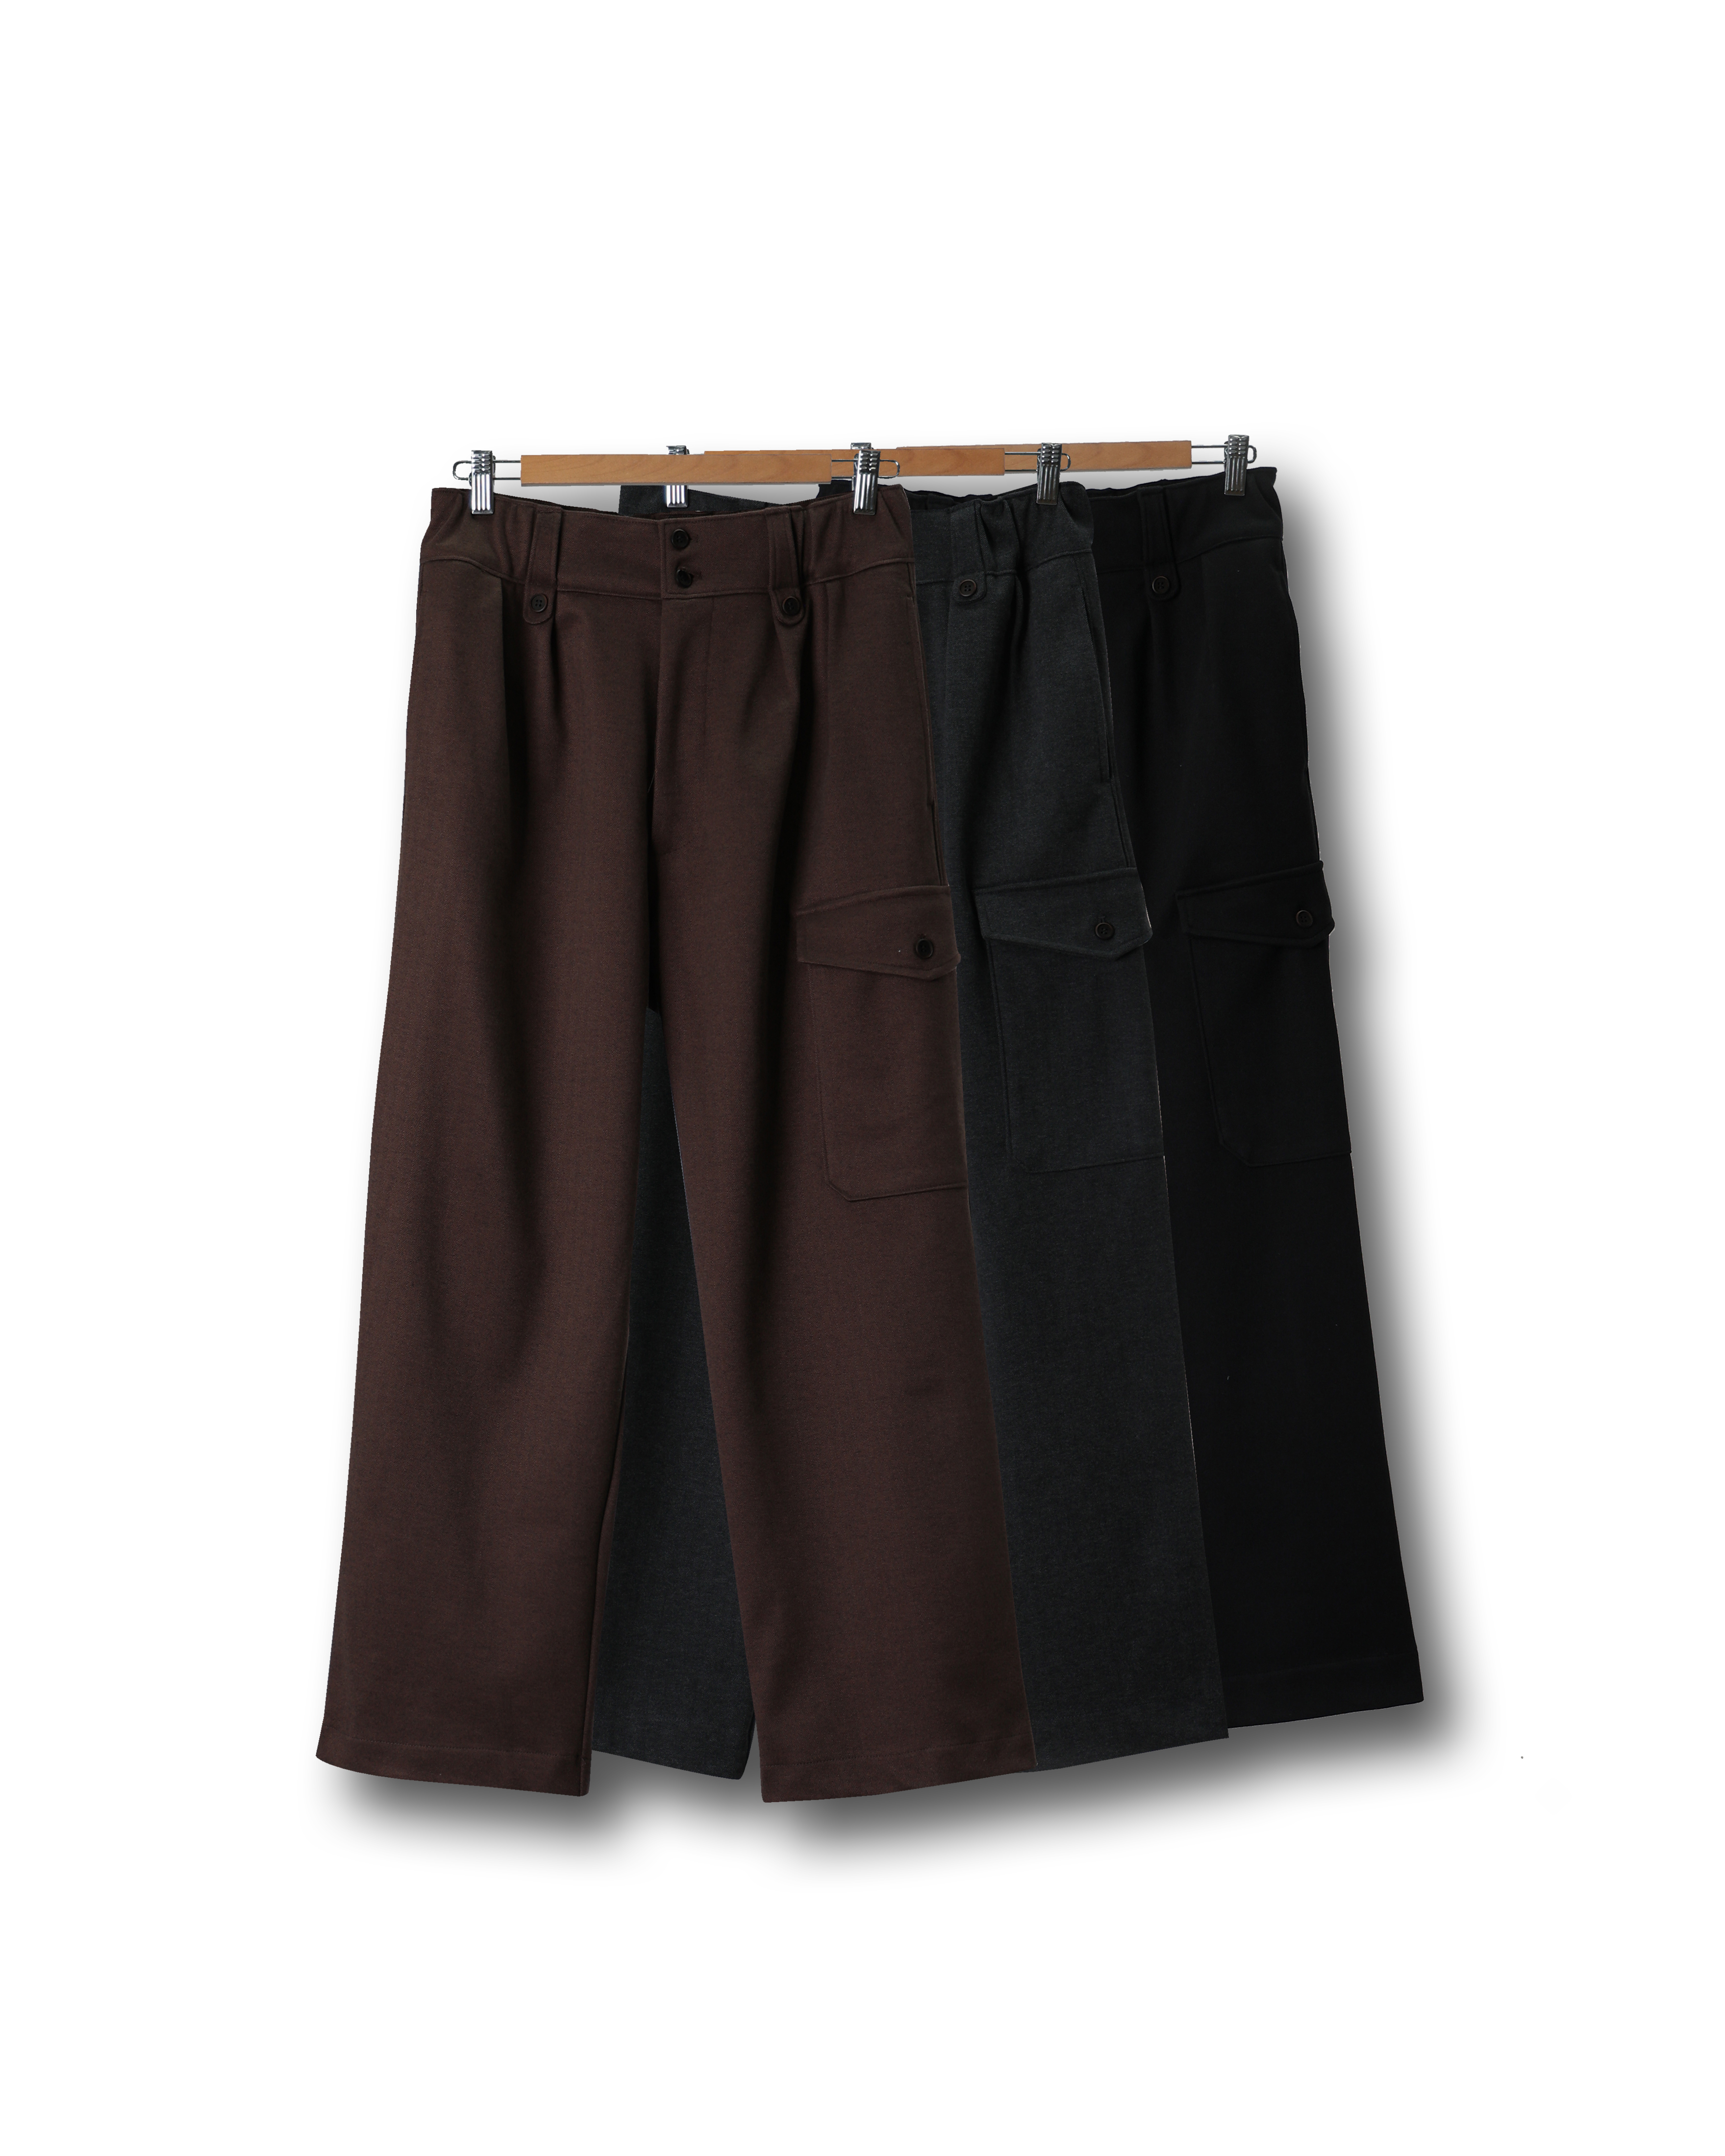 LIVERT WL Winter Cargo Easy Pants (Black/Charcoal/Brown)